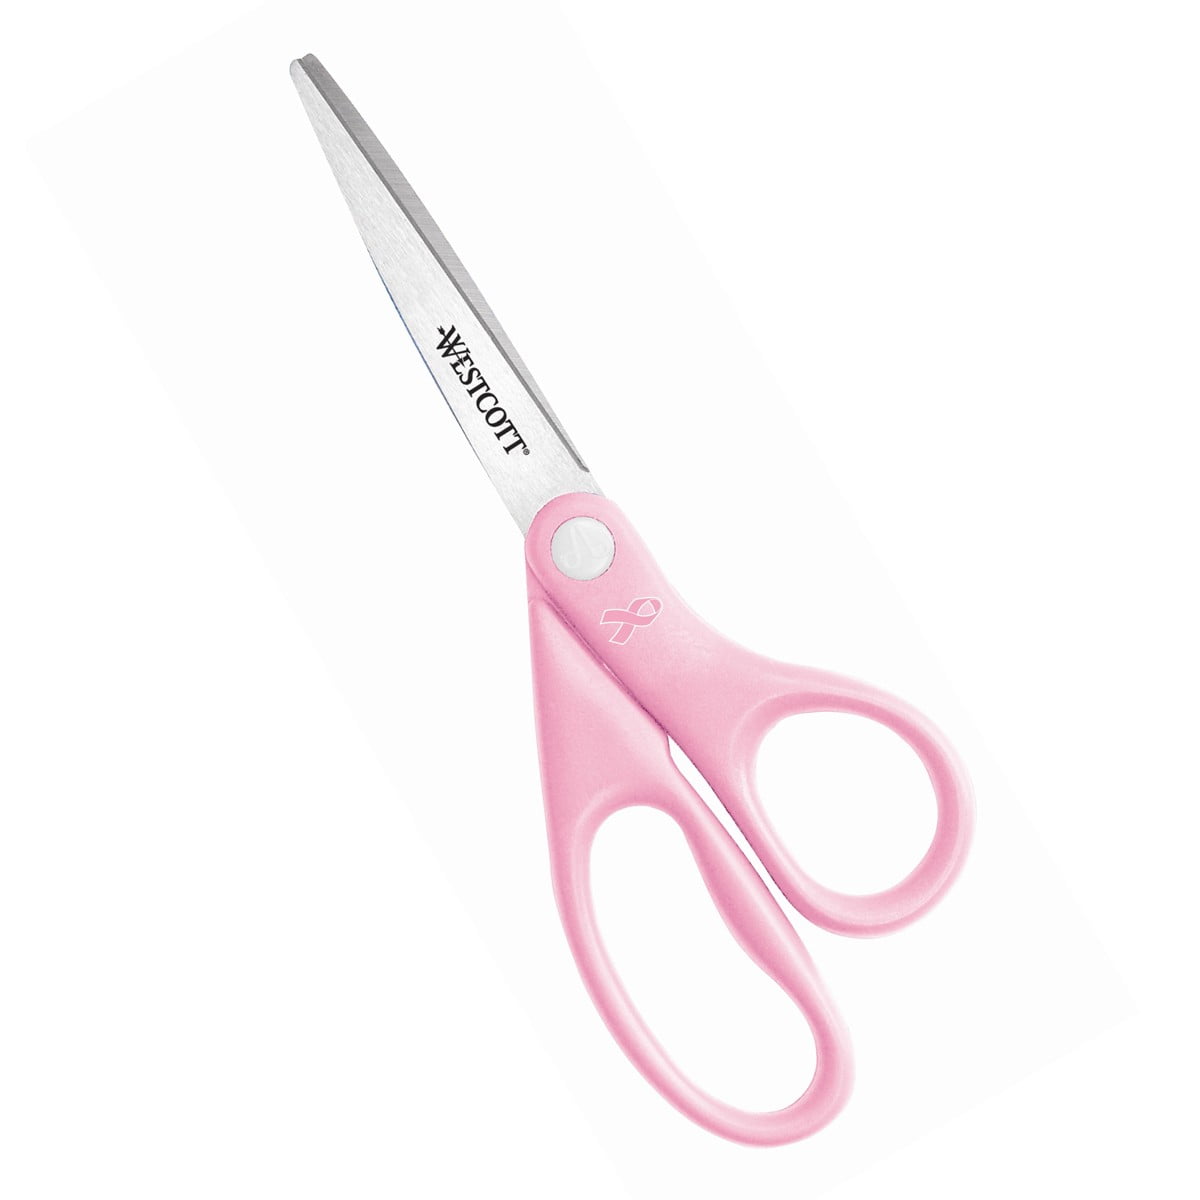 Enday 8 Scissors, Pink : Target